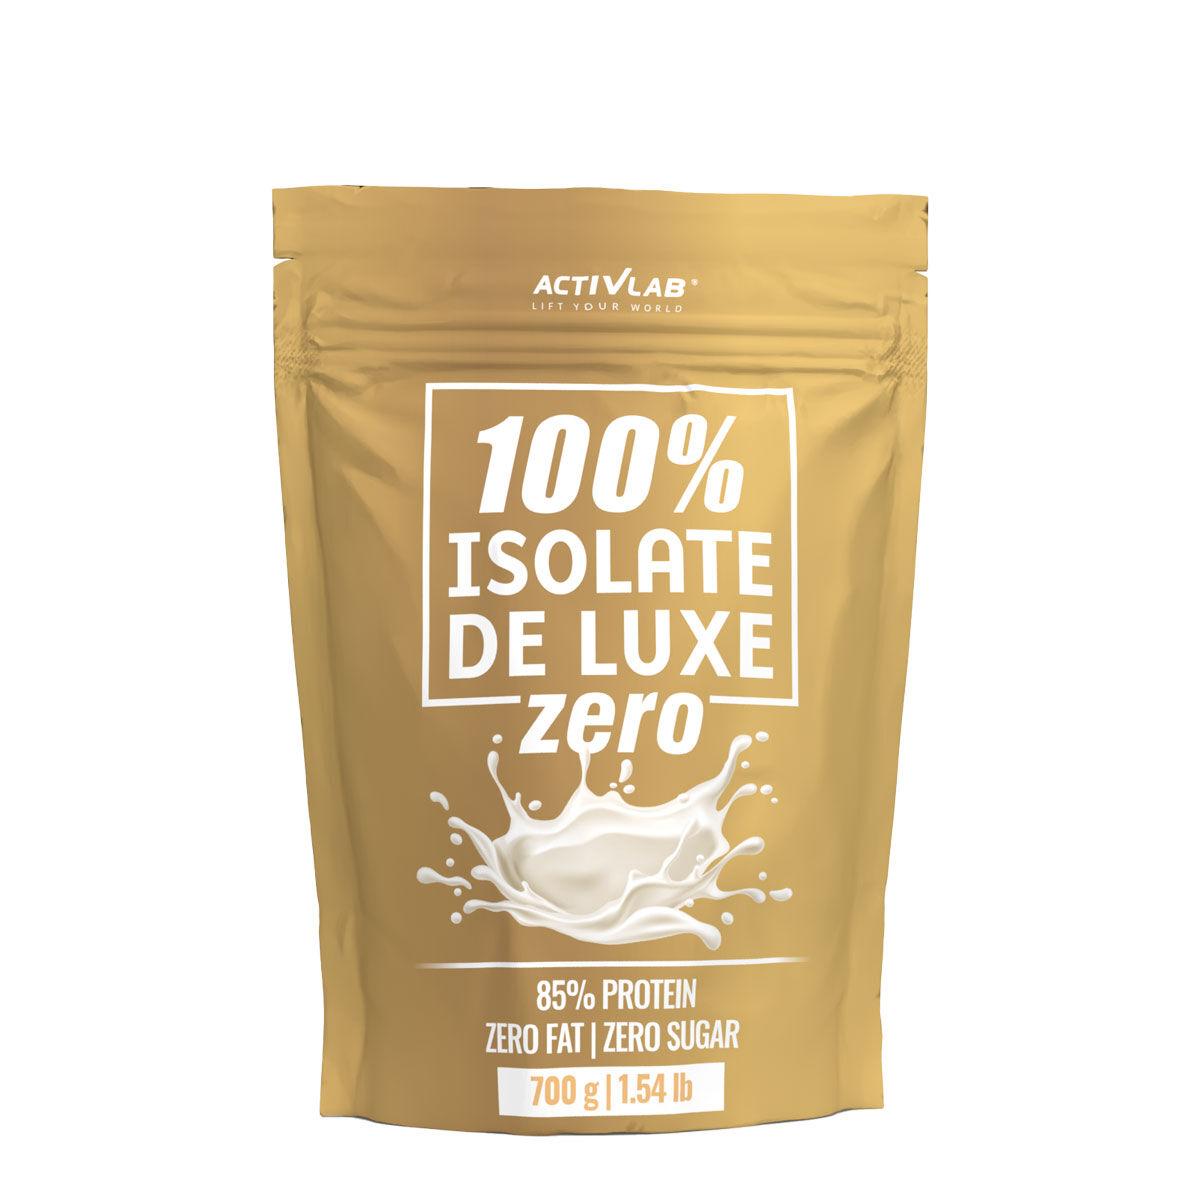 ACTIVLAB Whey protein Isolate 100% de Luxe zero neutral 700g